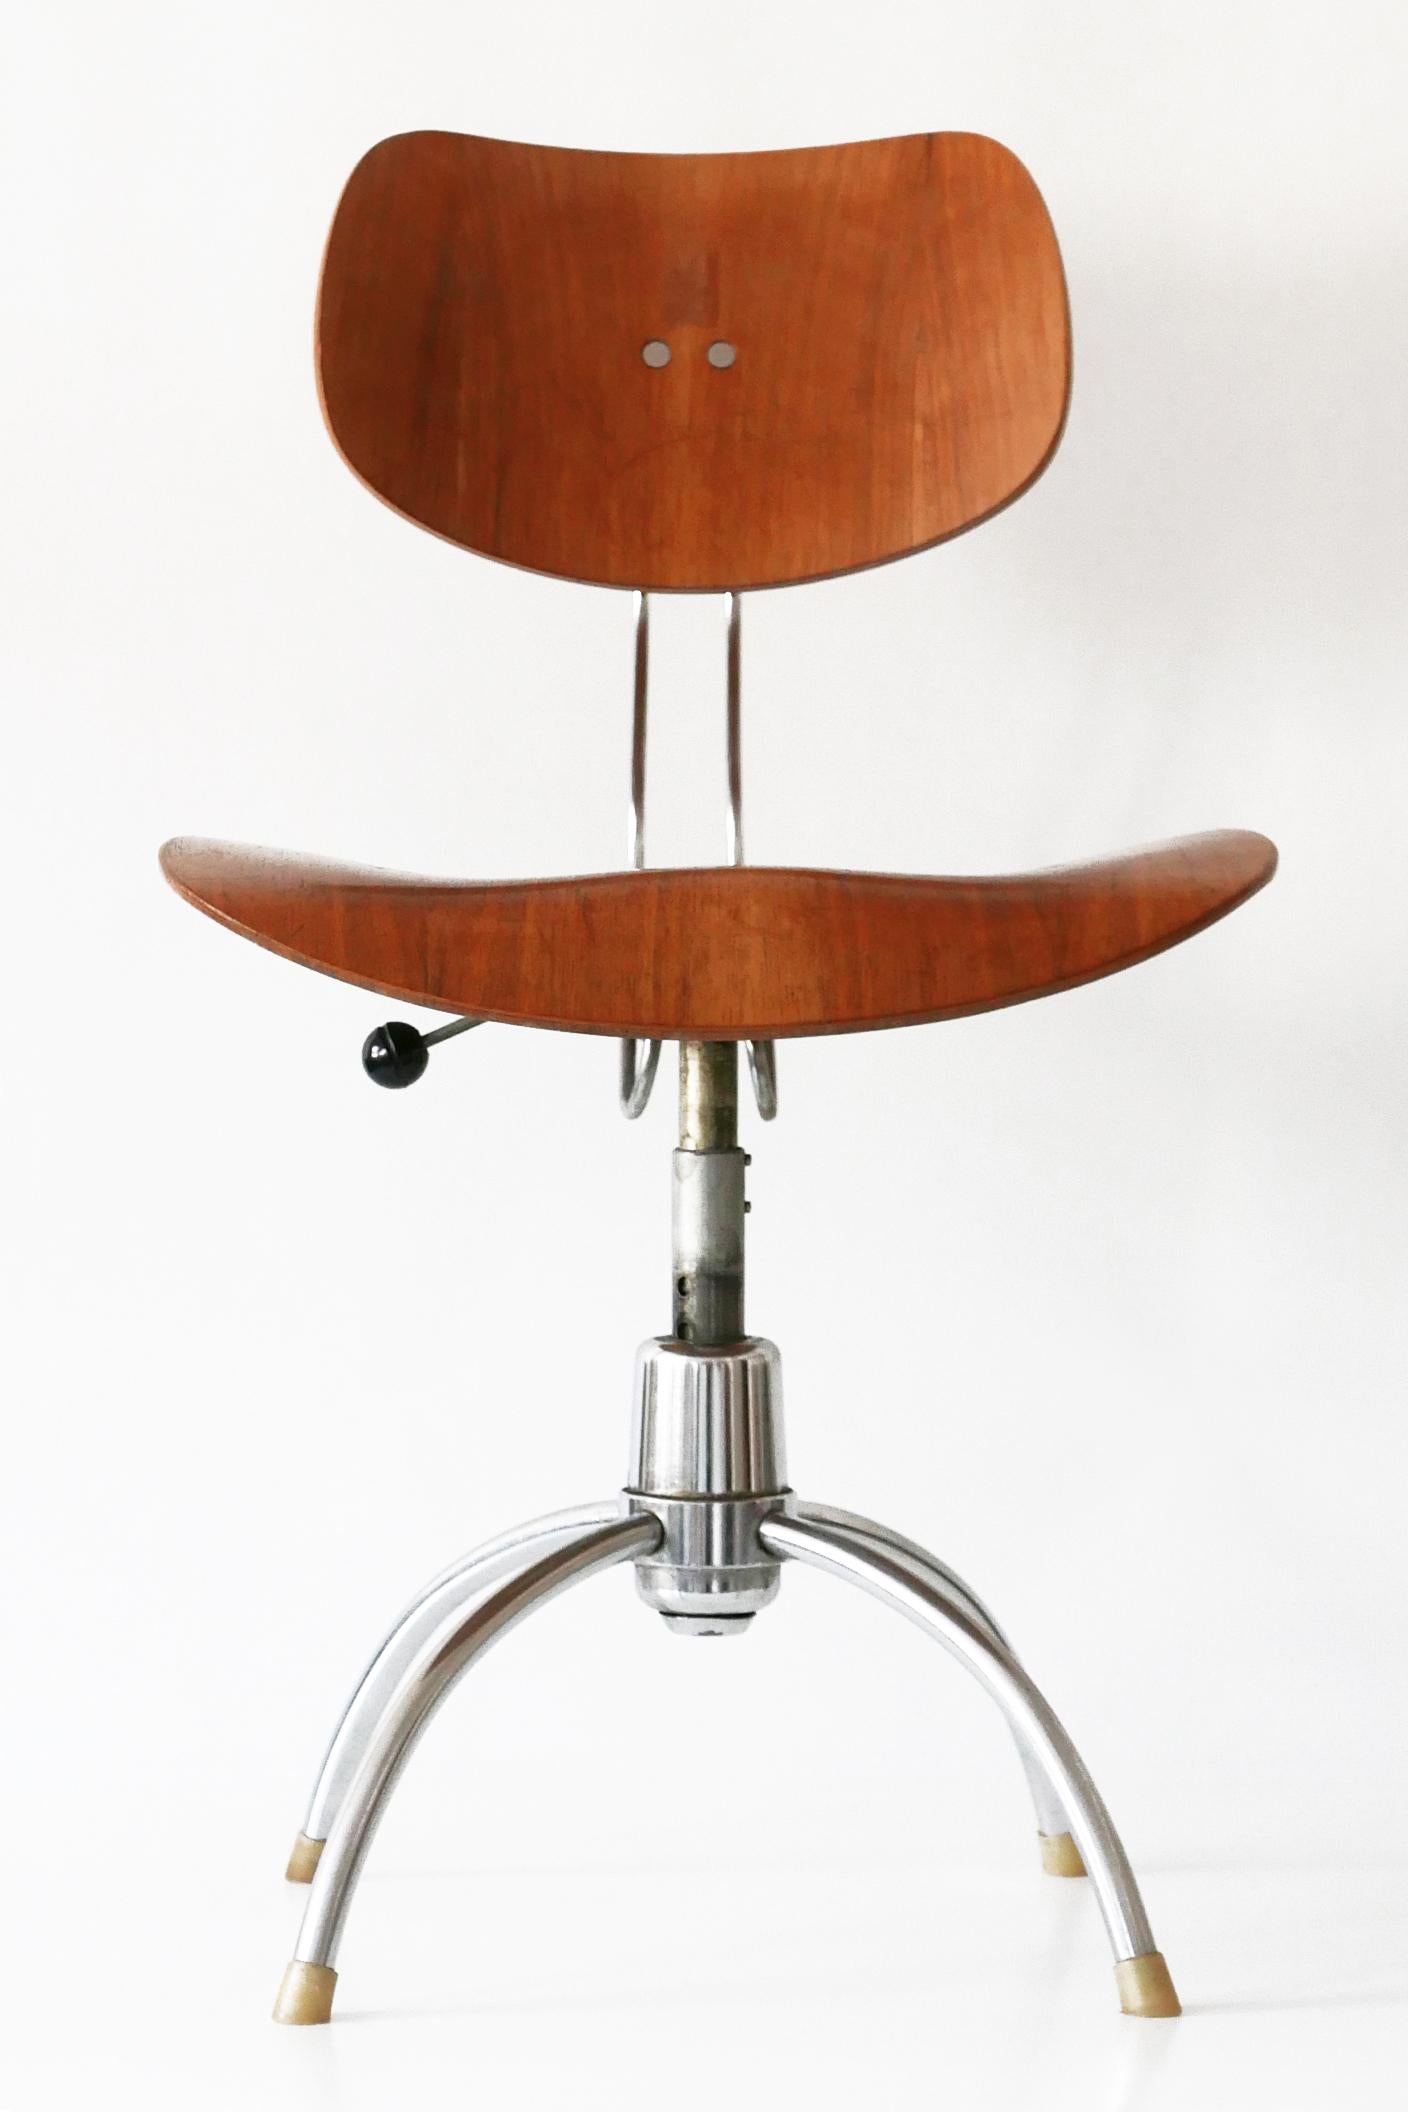 Mid-20th Century Midcentury Spring Swivel Office Chair SE 40 by Egon Eiermann for Wilde + Spieth